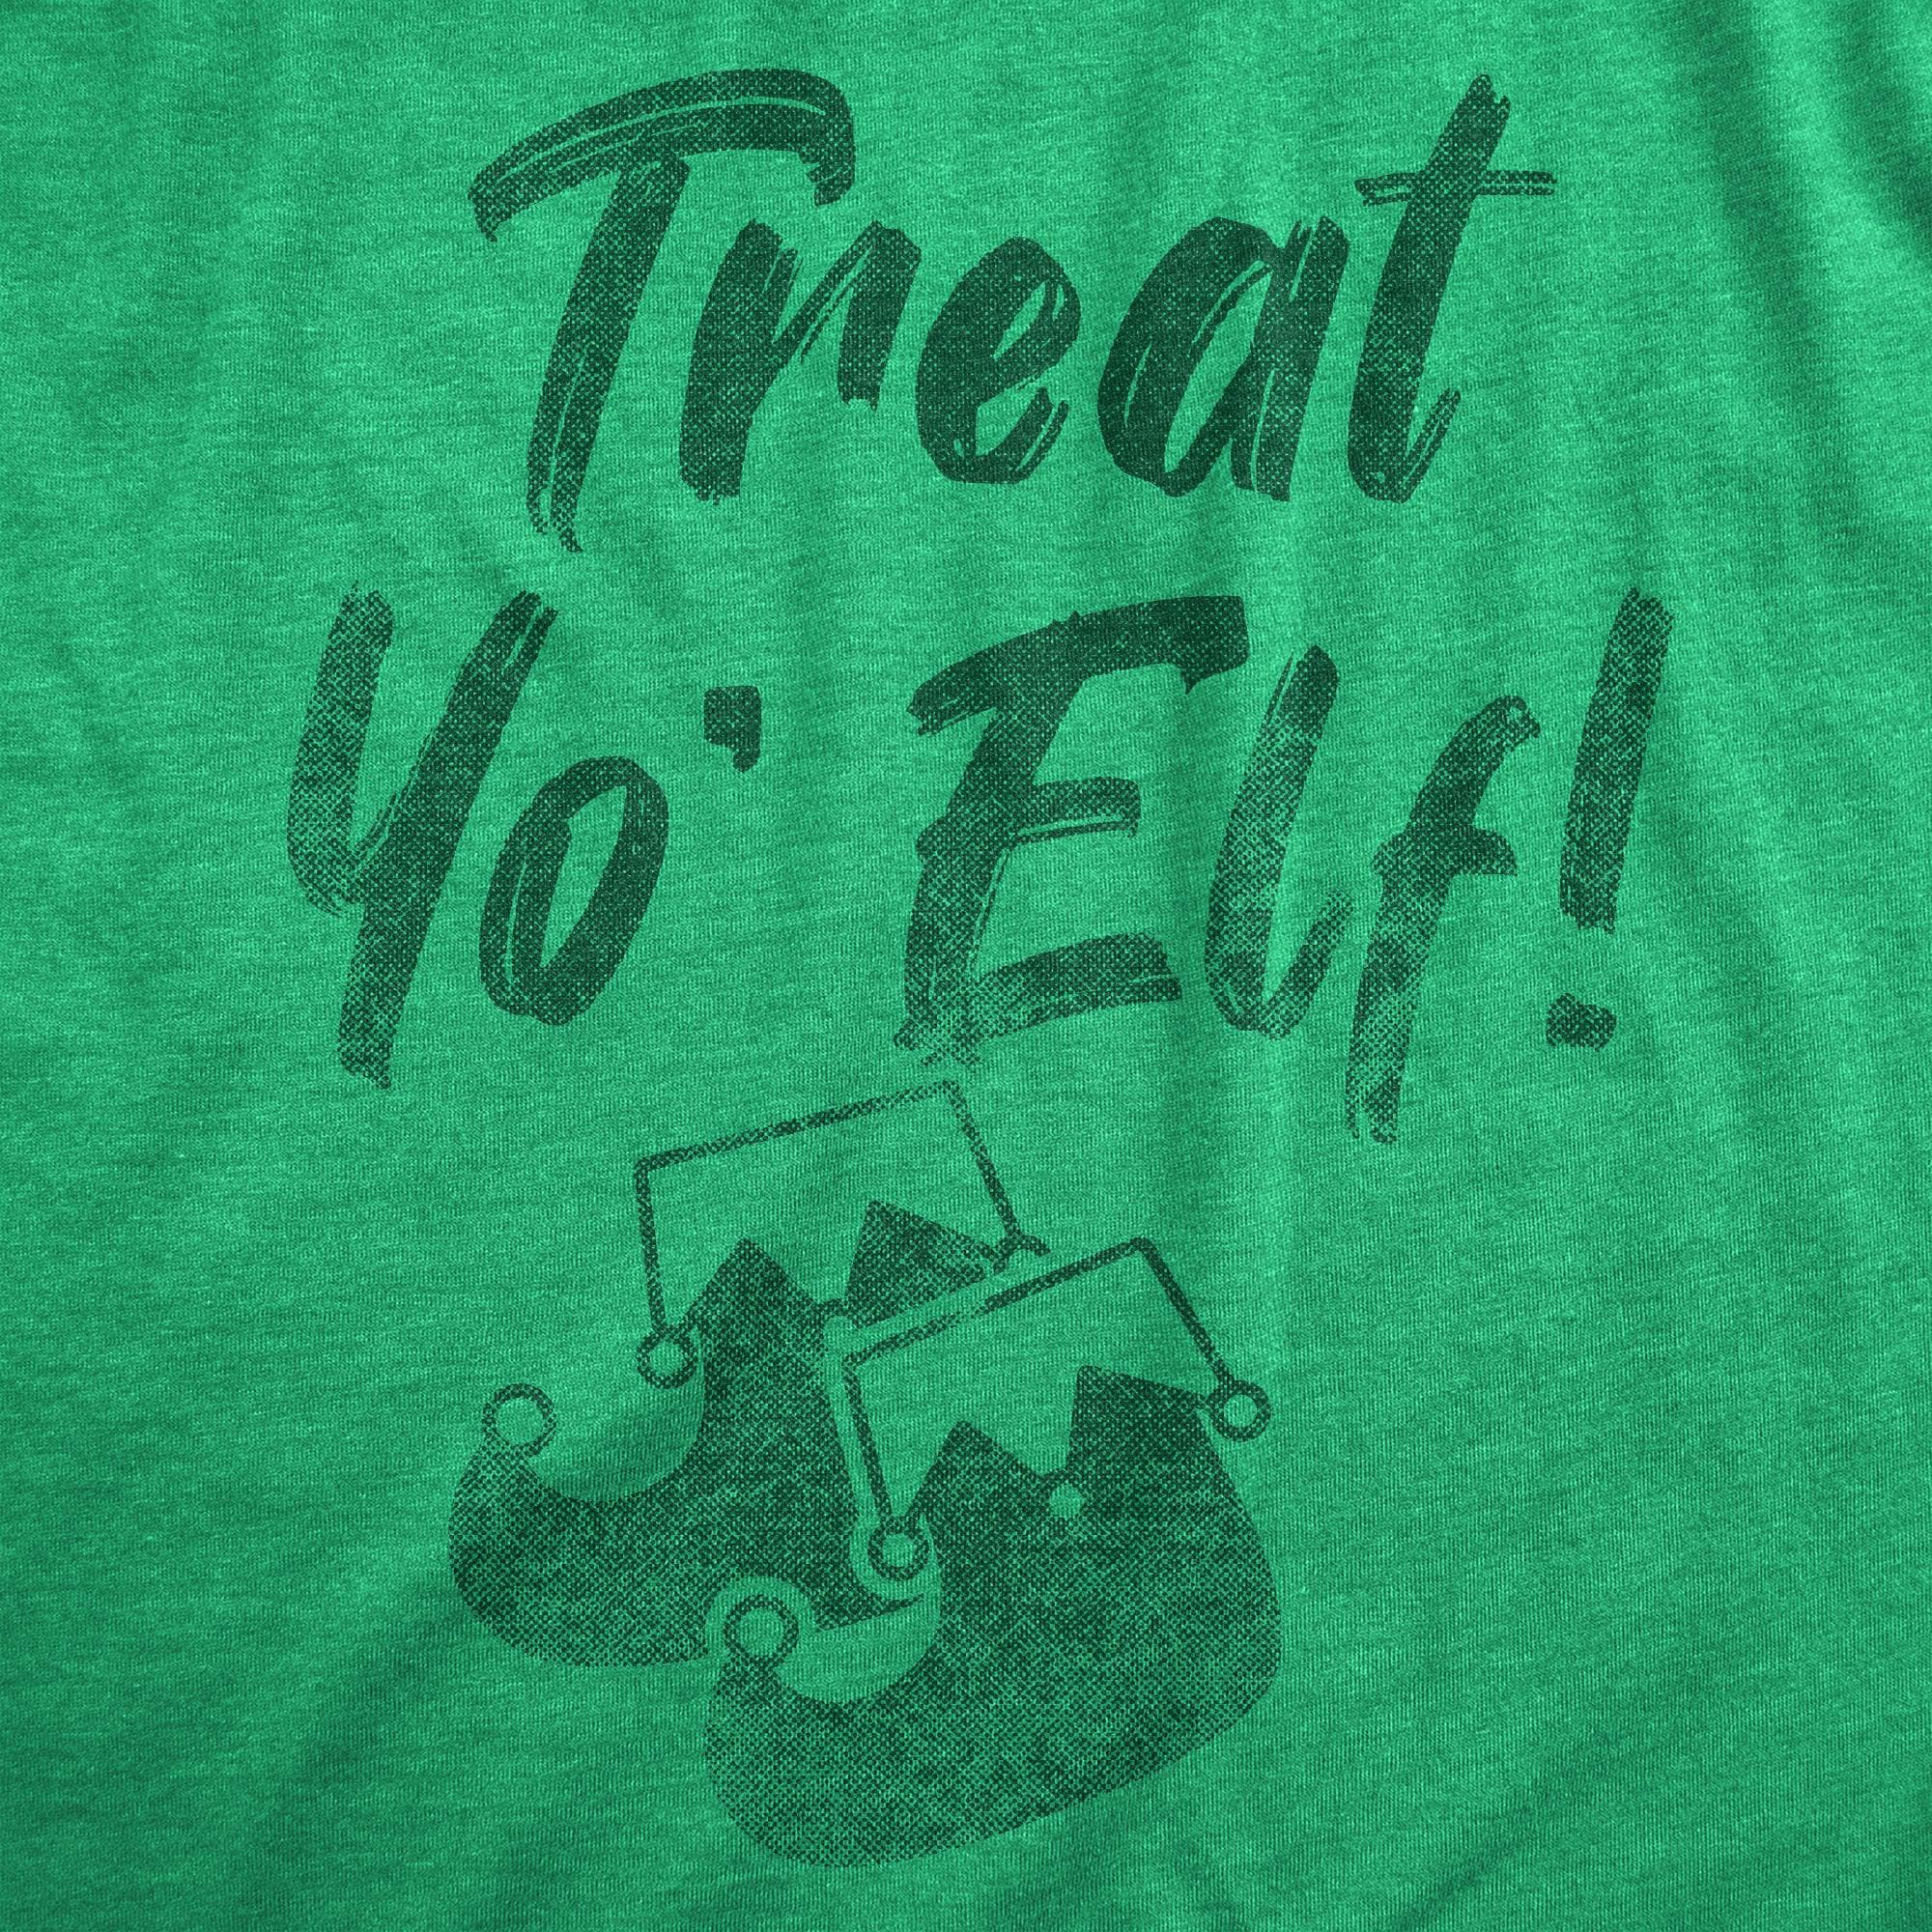 Treat Yo Elf Women's Tshirt  -  Crazy Dog T-Shirts